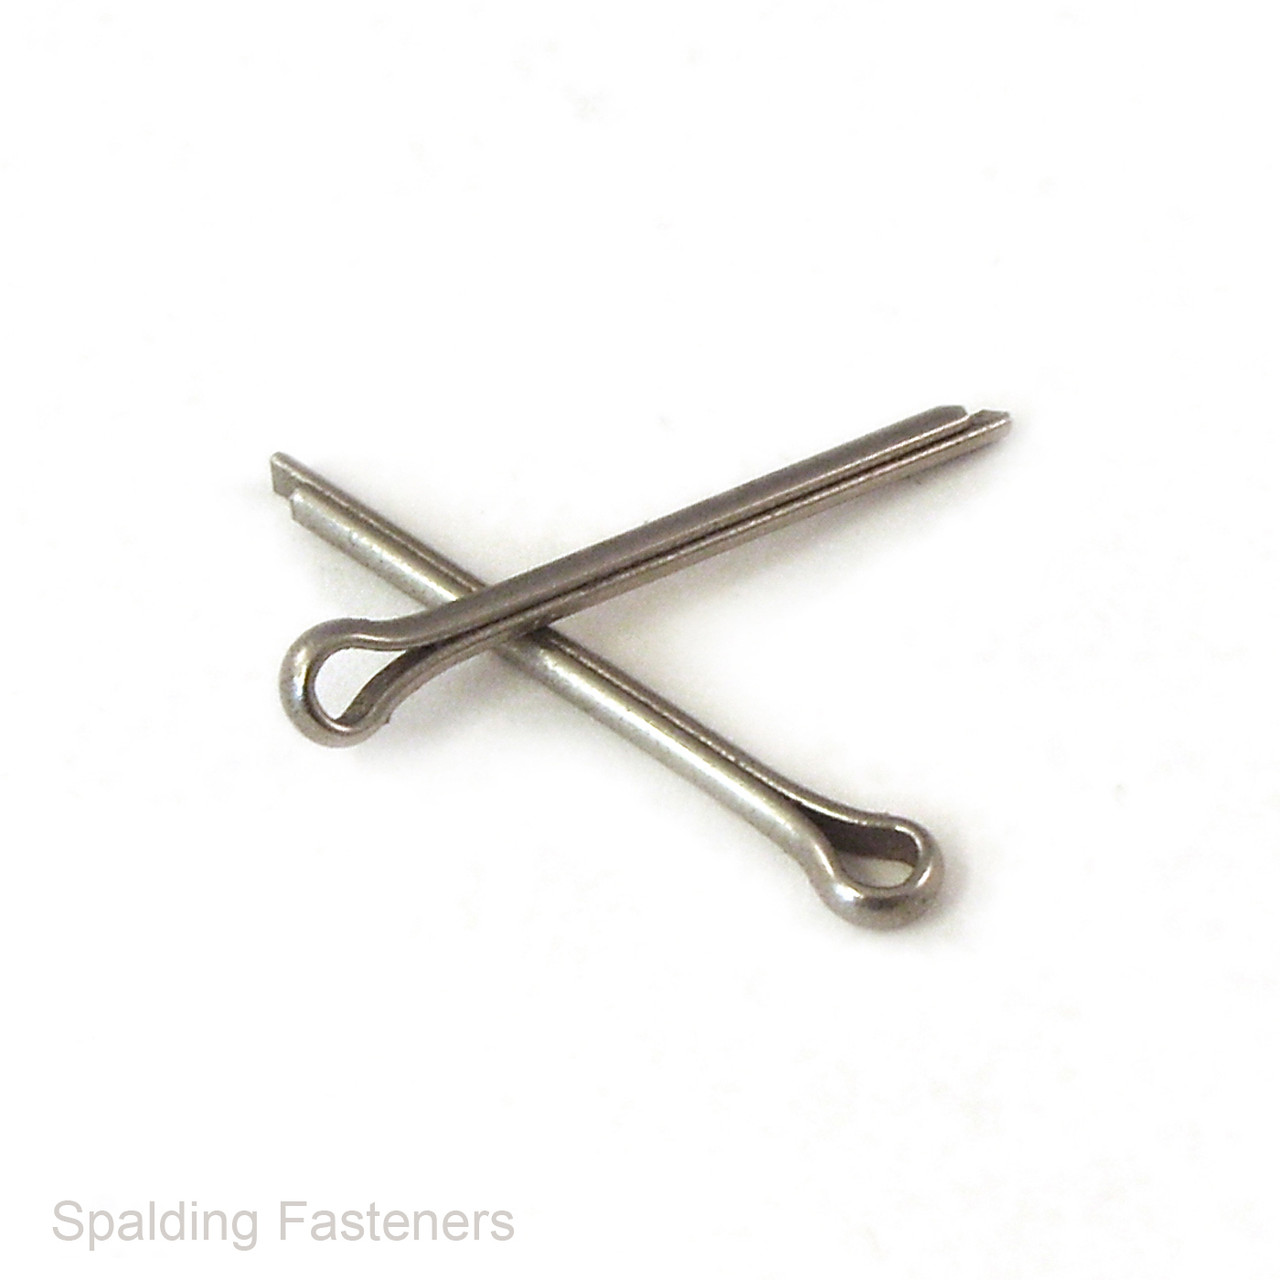 7/64" (2.8mm) Zinc Plated Steel Cotter Split Pins